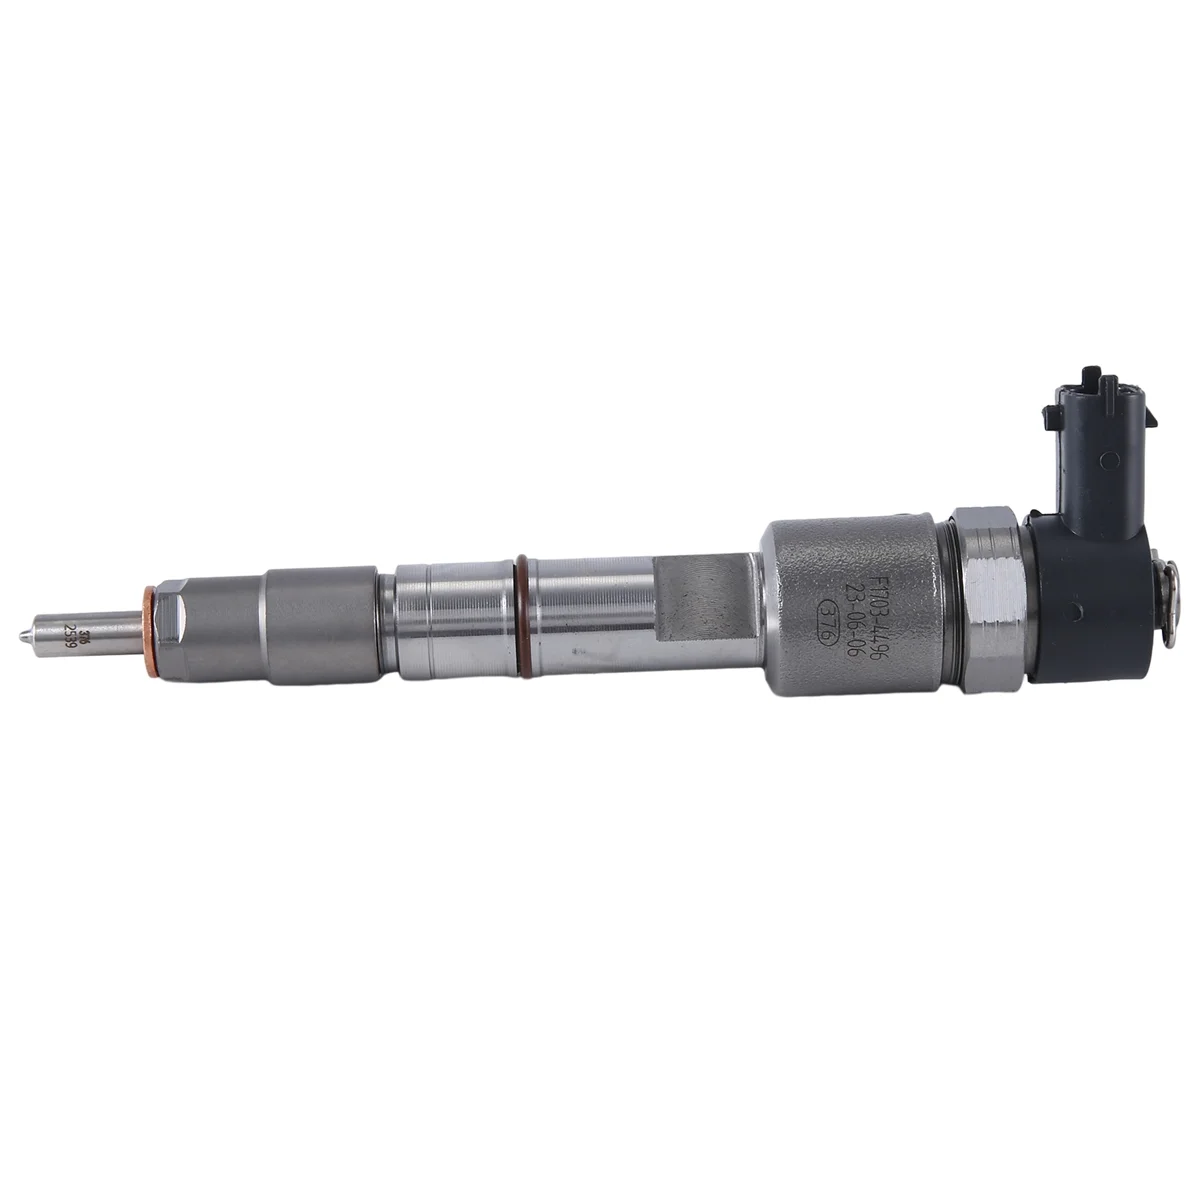 

0445110792 New Common Rail Diesel Fuel Injector Nozzle for Quanchai